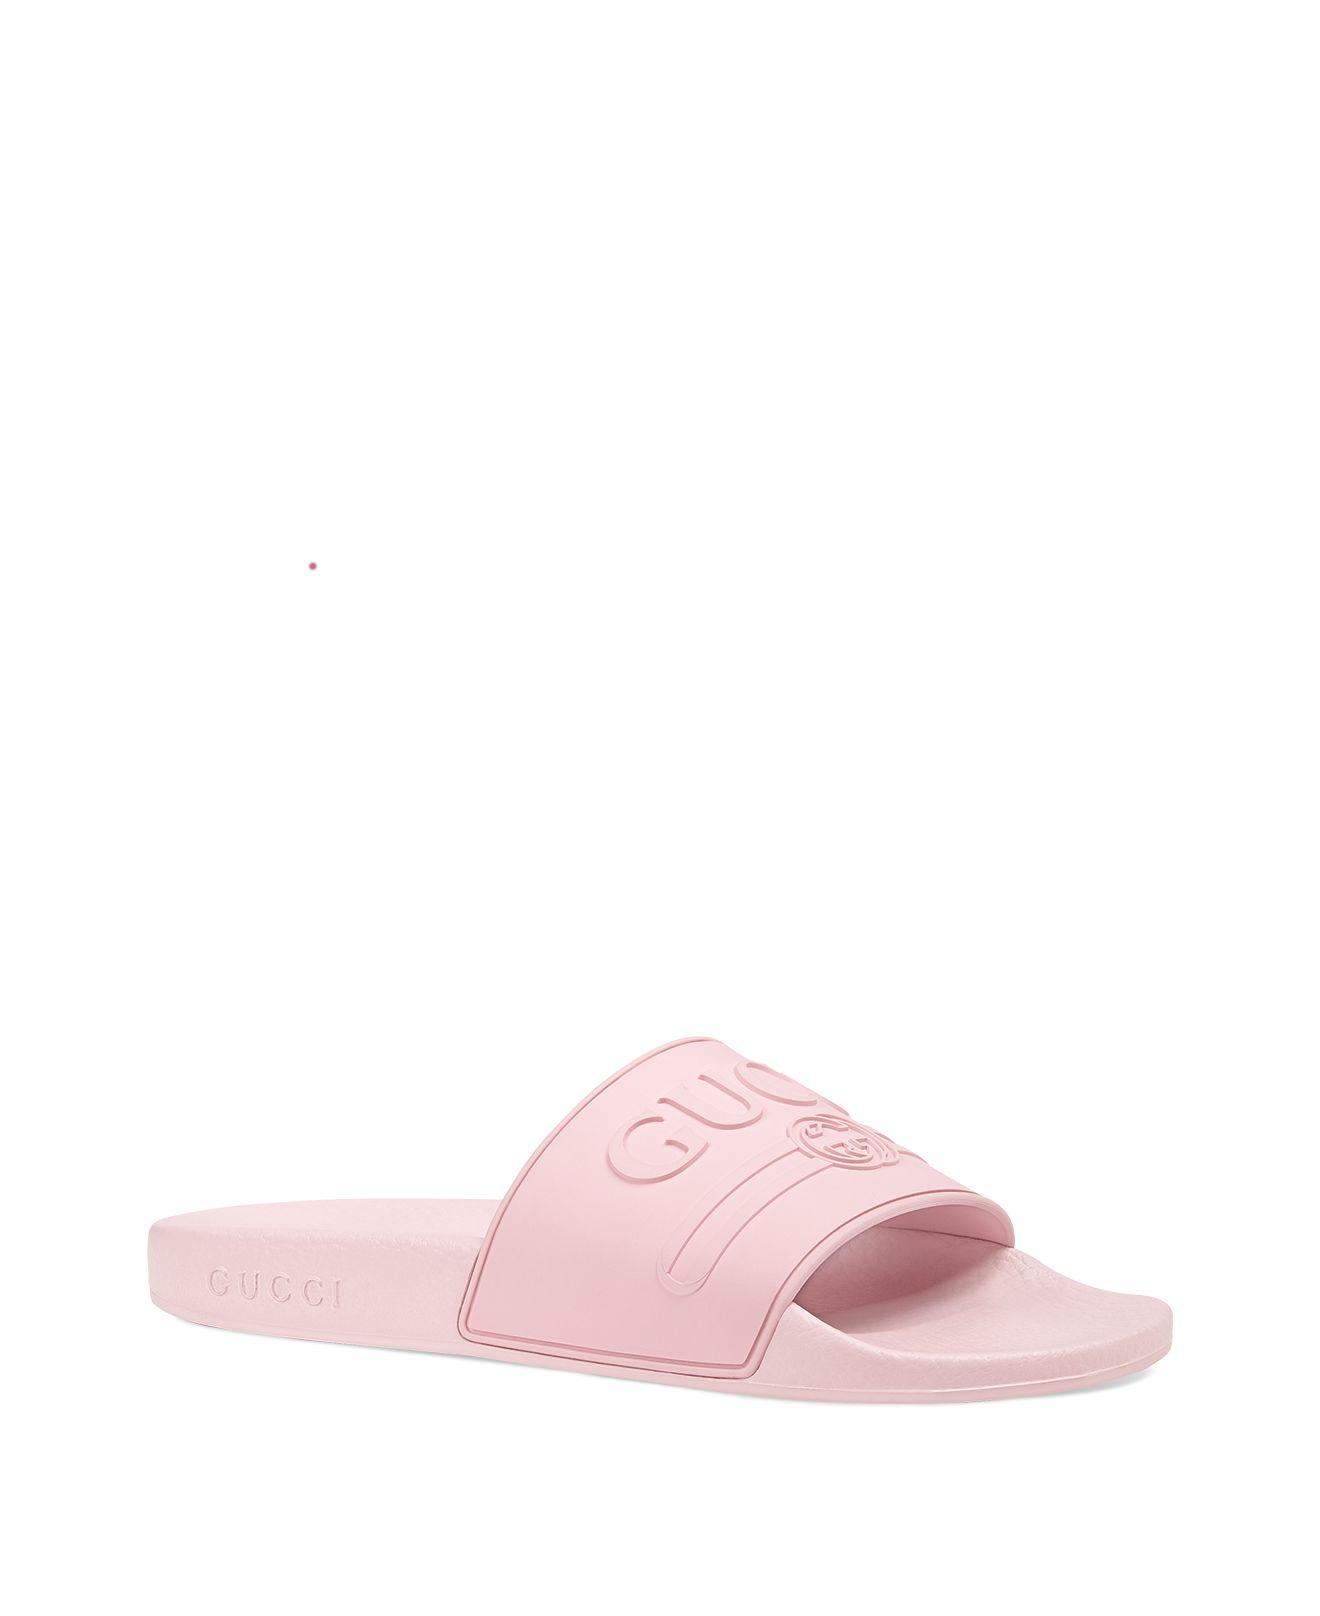 Gucci Women's Logo Slide Sandals in Pink - Lyst